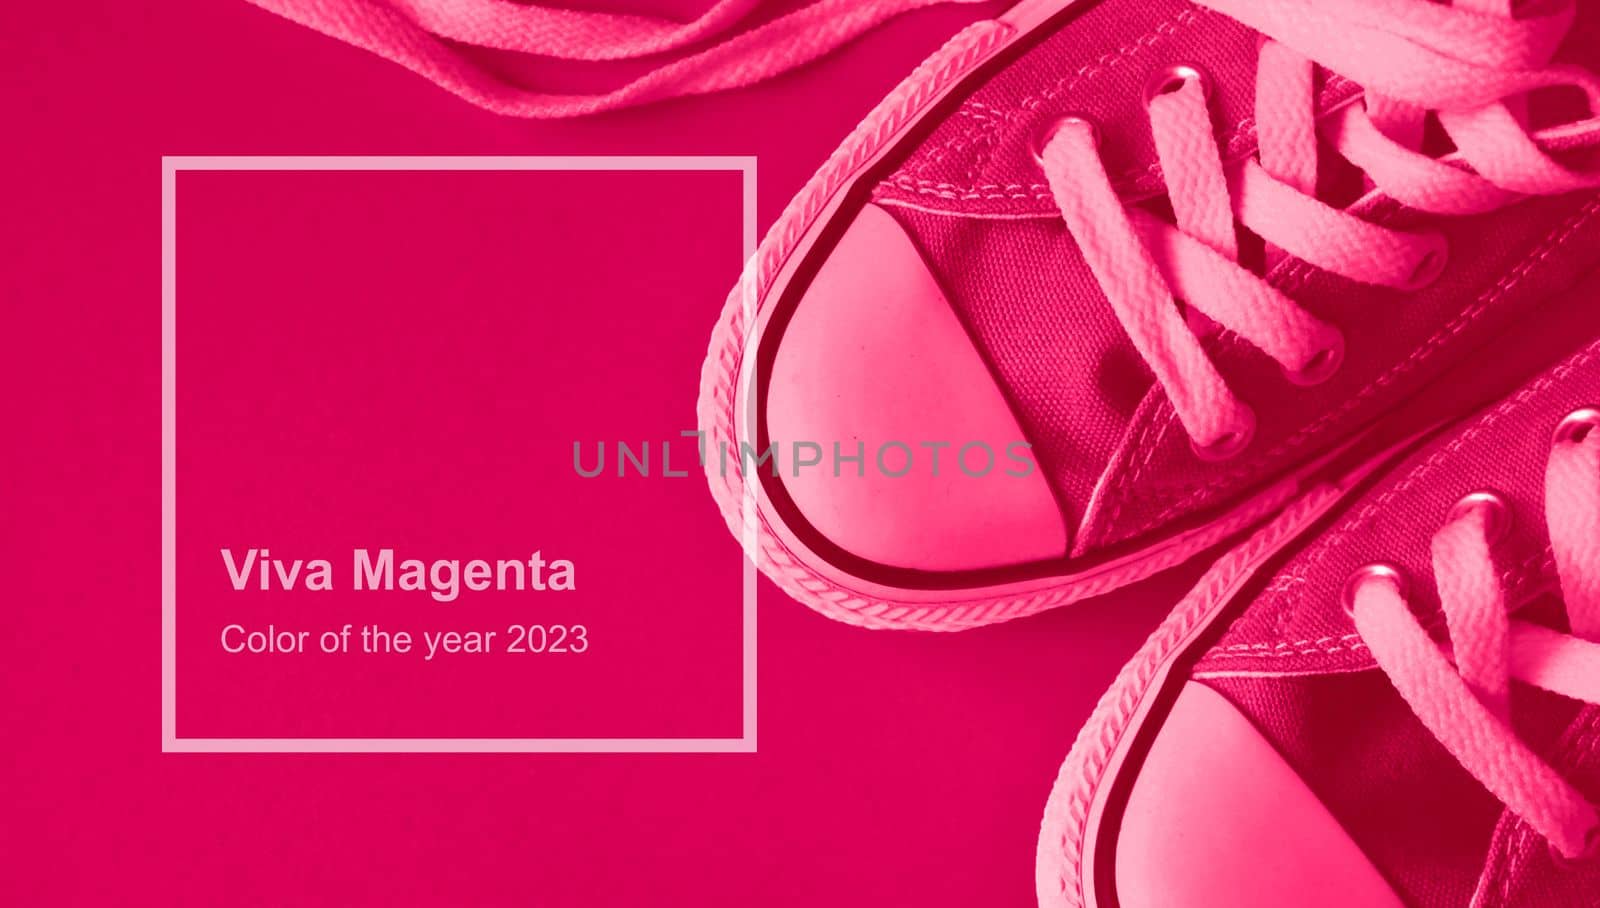 Viva Magenta monochrome sneakers. Trendy color 2023 concept. High quality photo